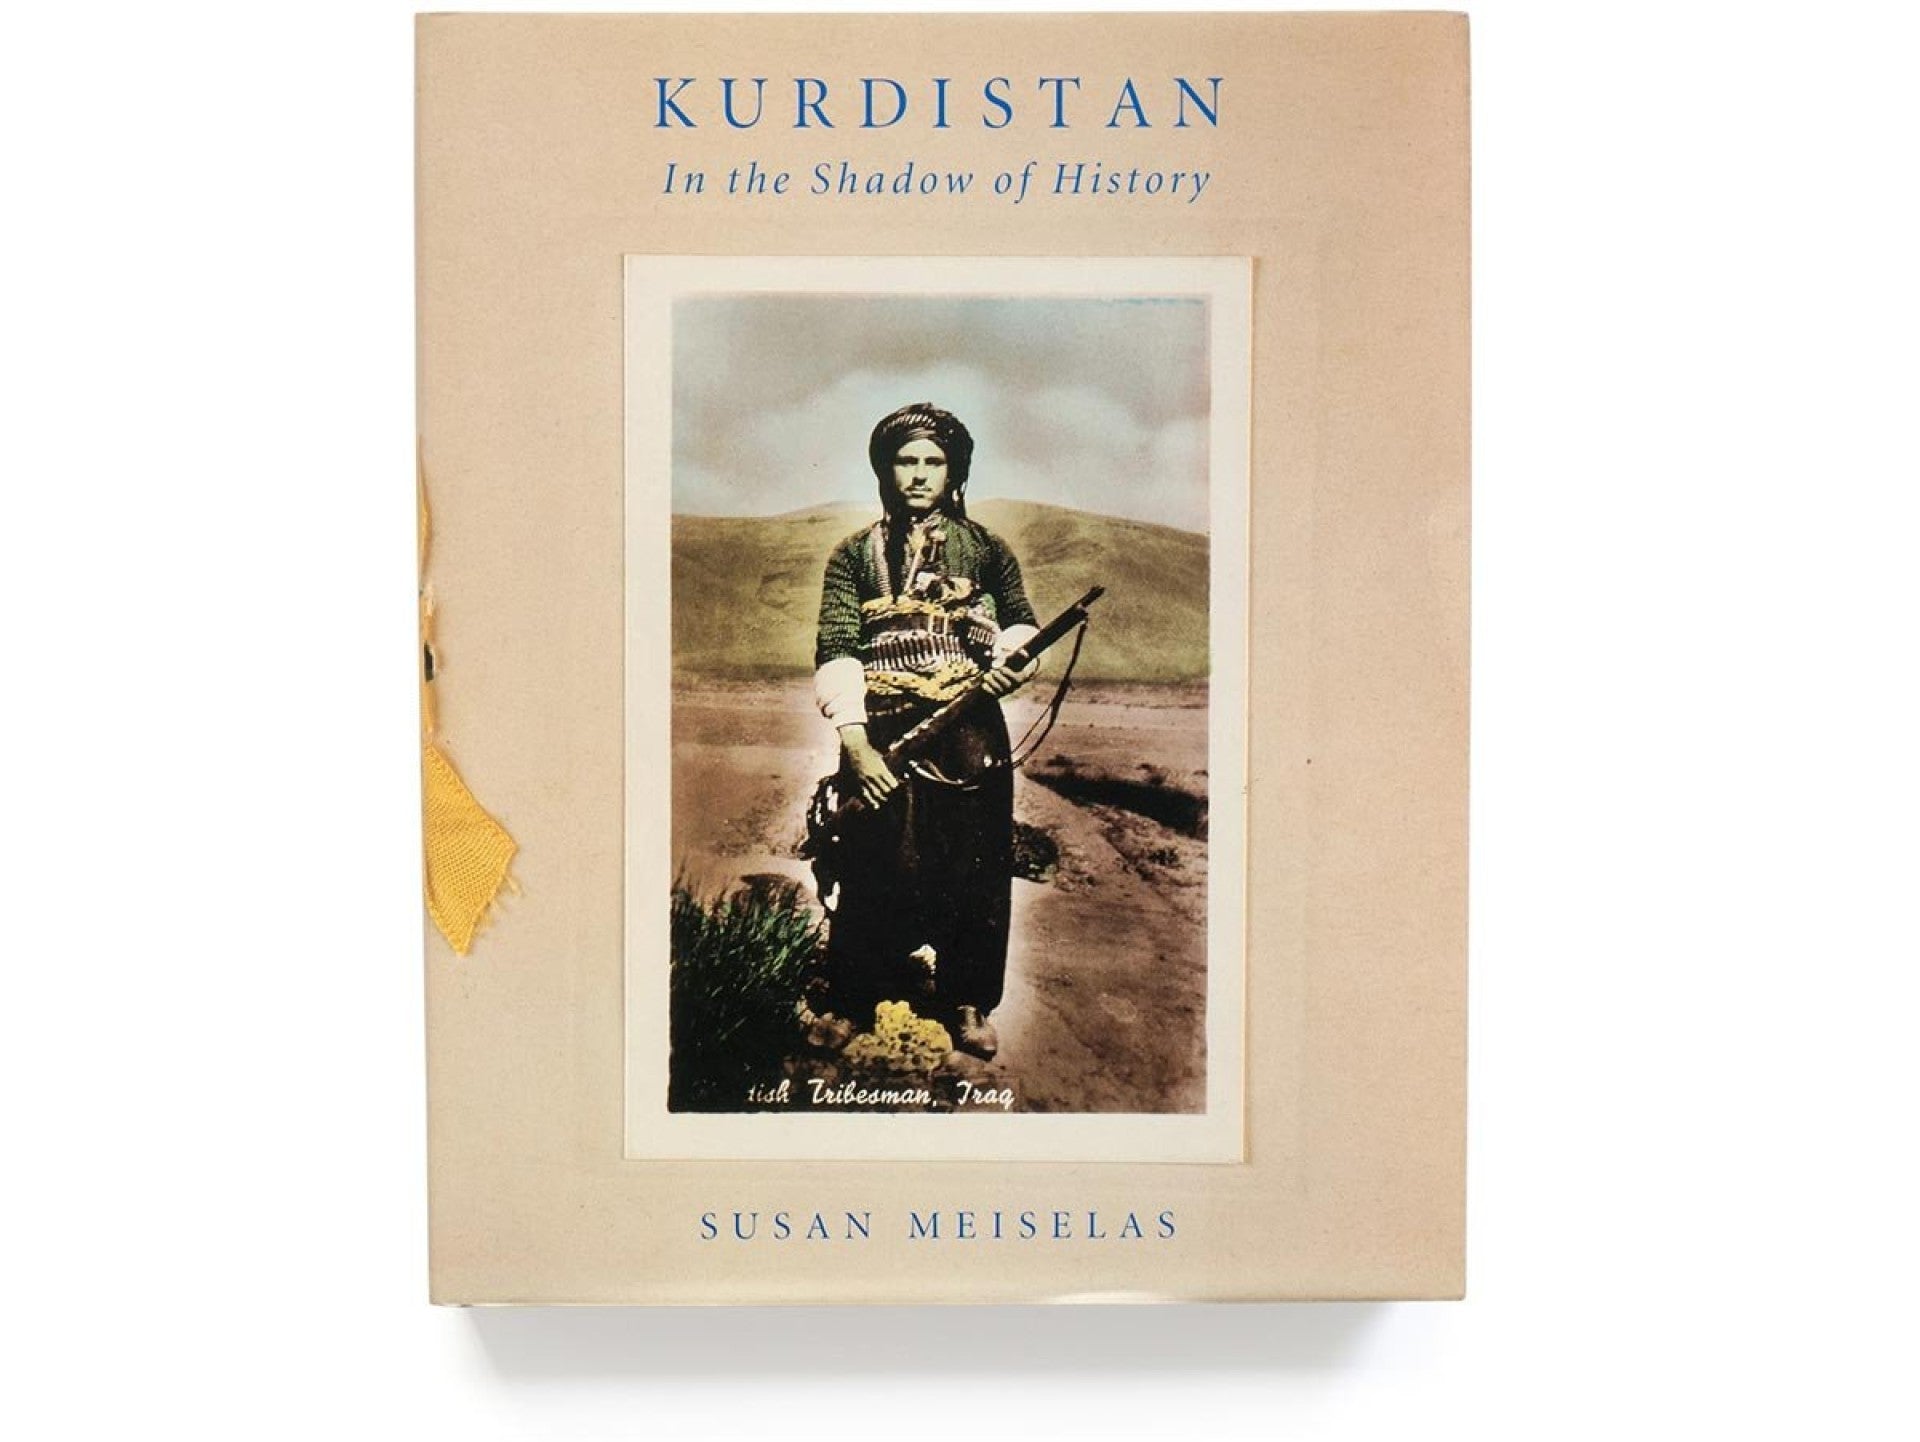 Kurdistan: In the Shadow of History